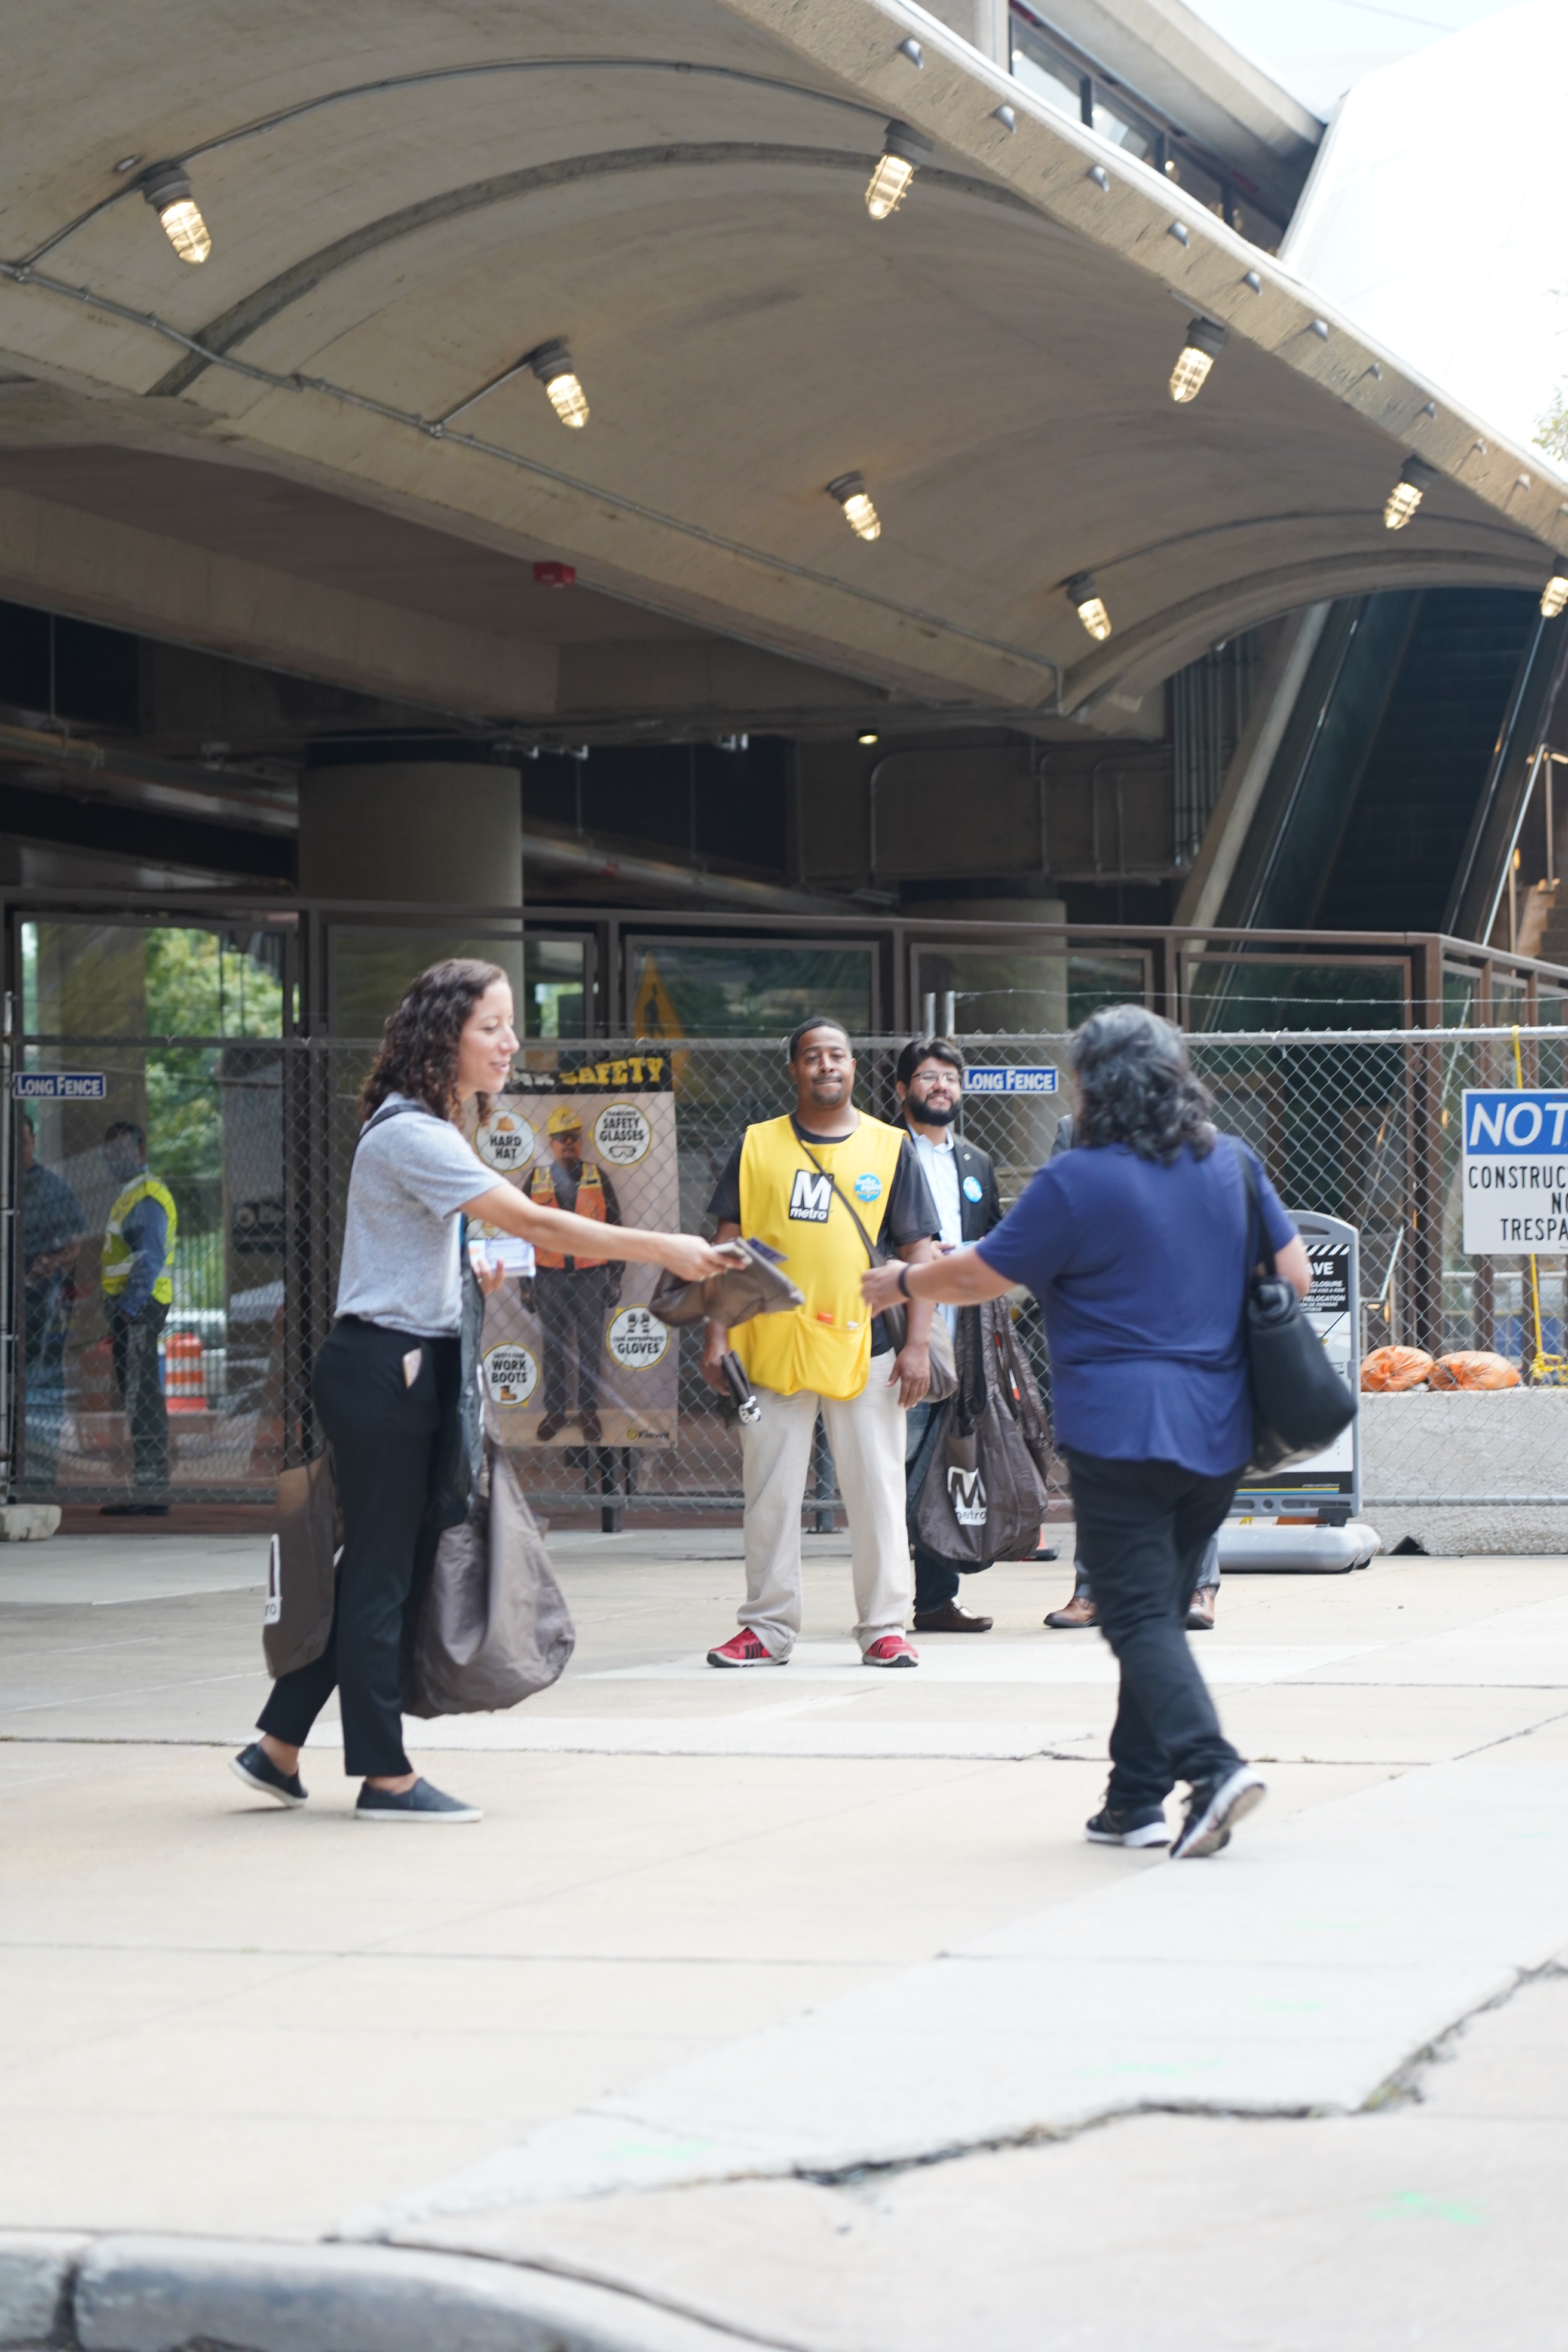 Metro staff greet riders at station entrances